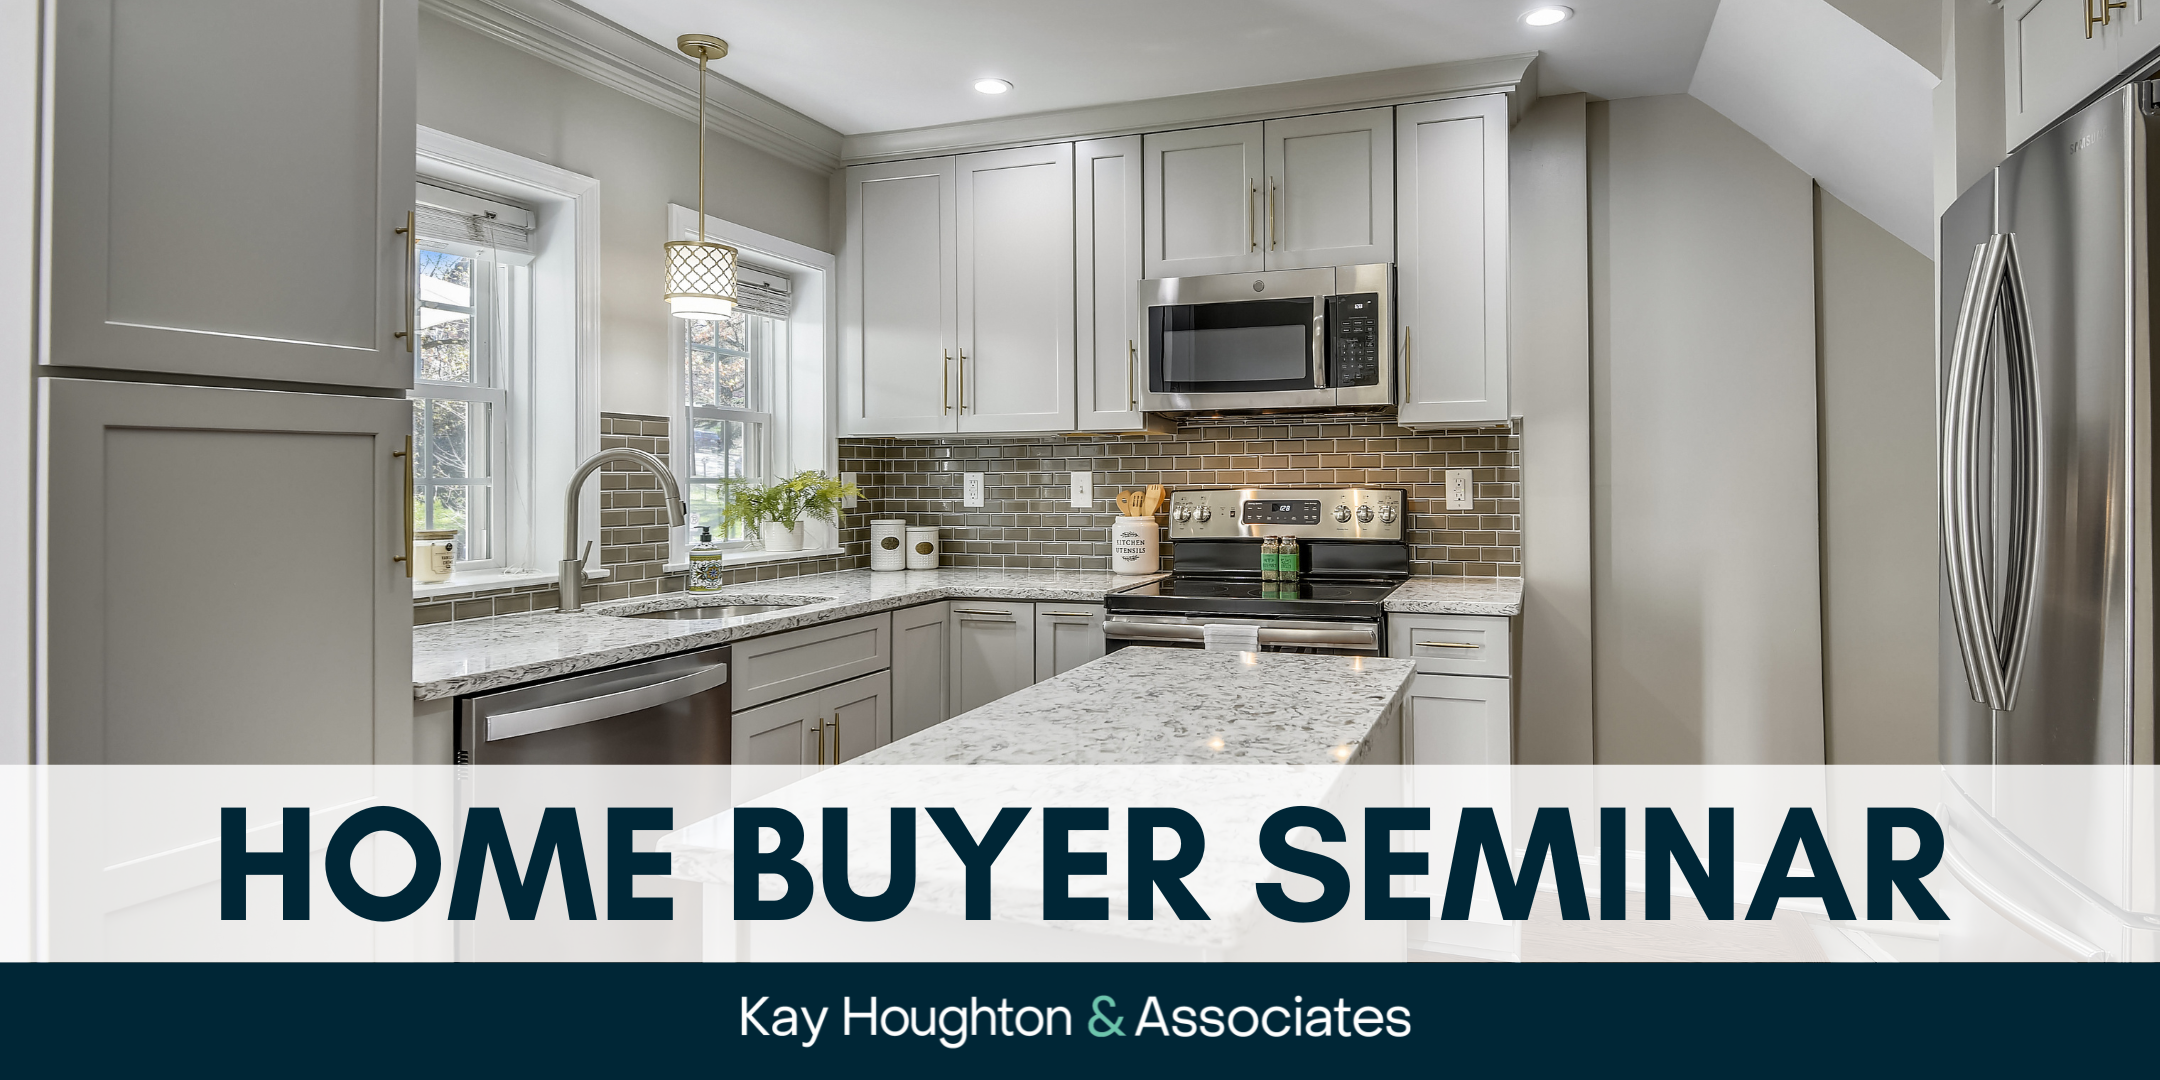 Home Buyer Seminar | Kay Houghton & Associates